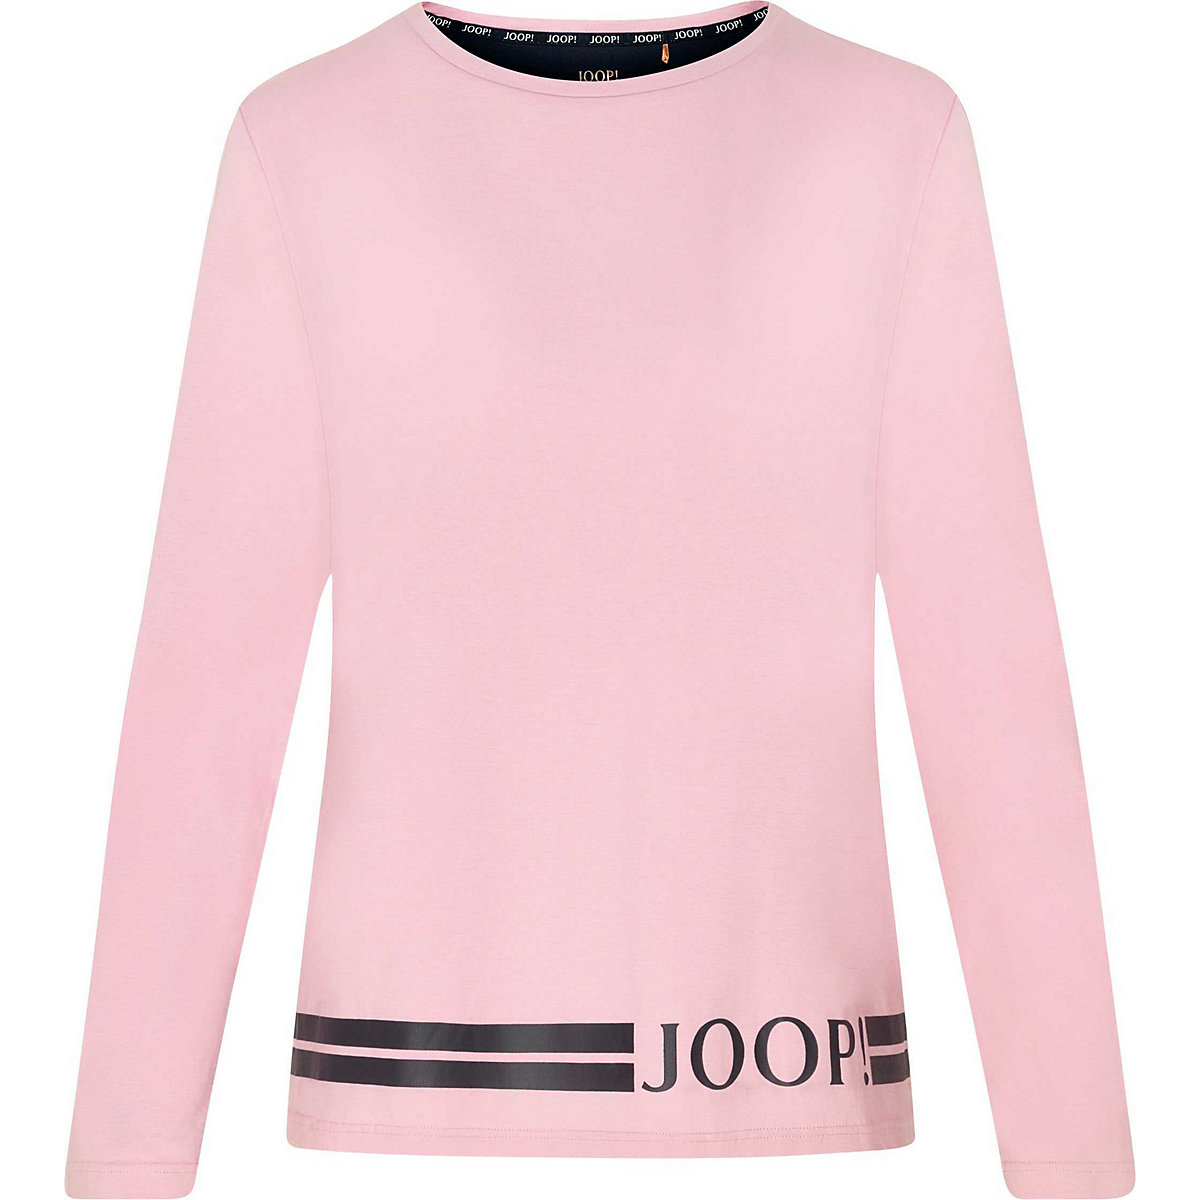 JOOP! Damen Longsleeve Shirt Baumwolle Rudhals Logo einfarbig lang T-Shirts rosa